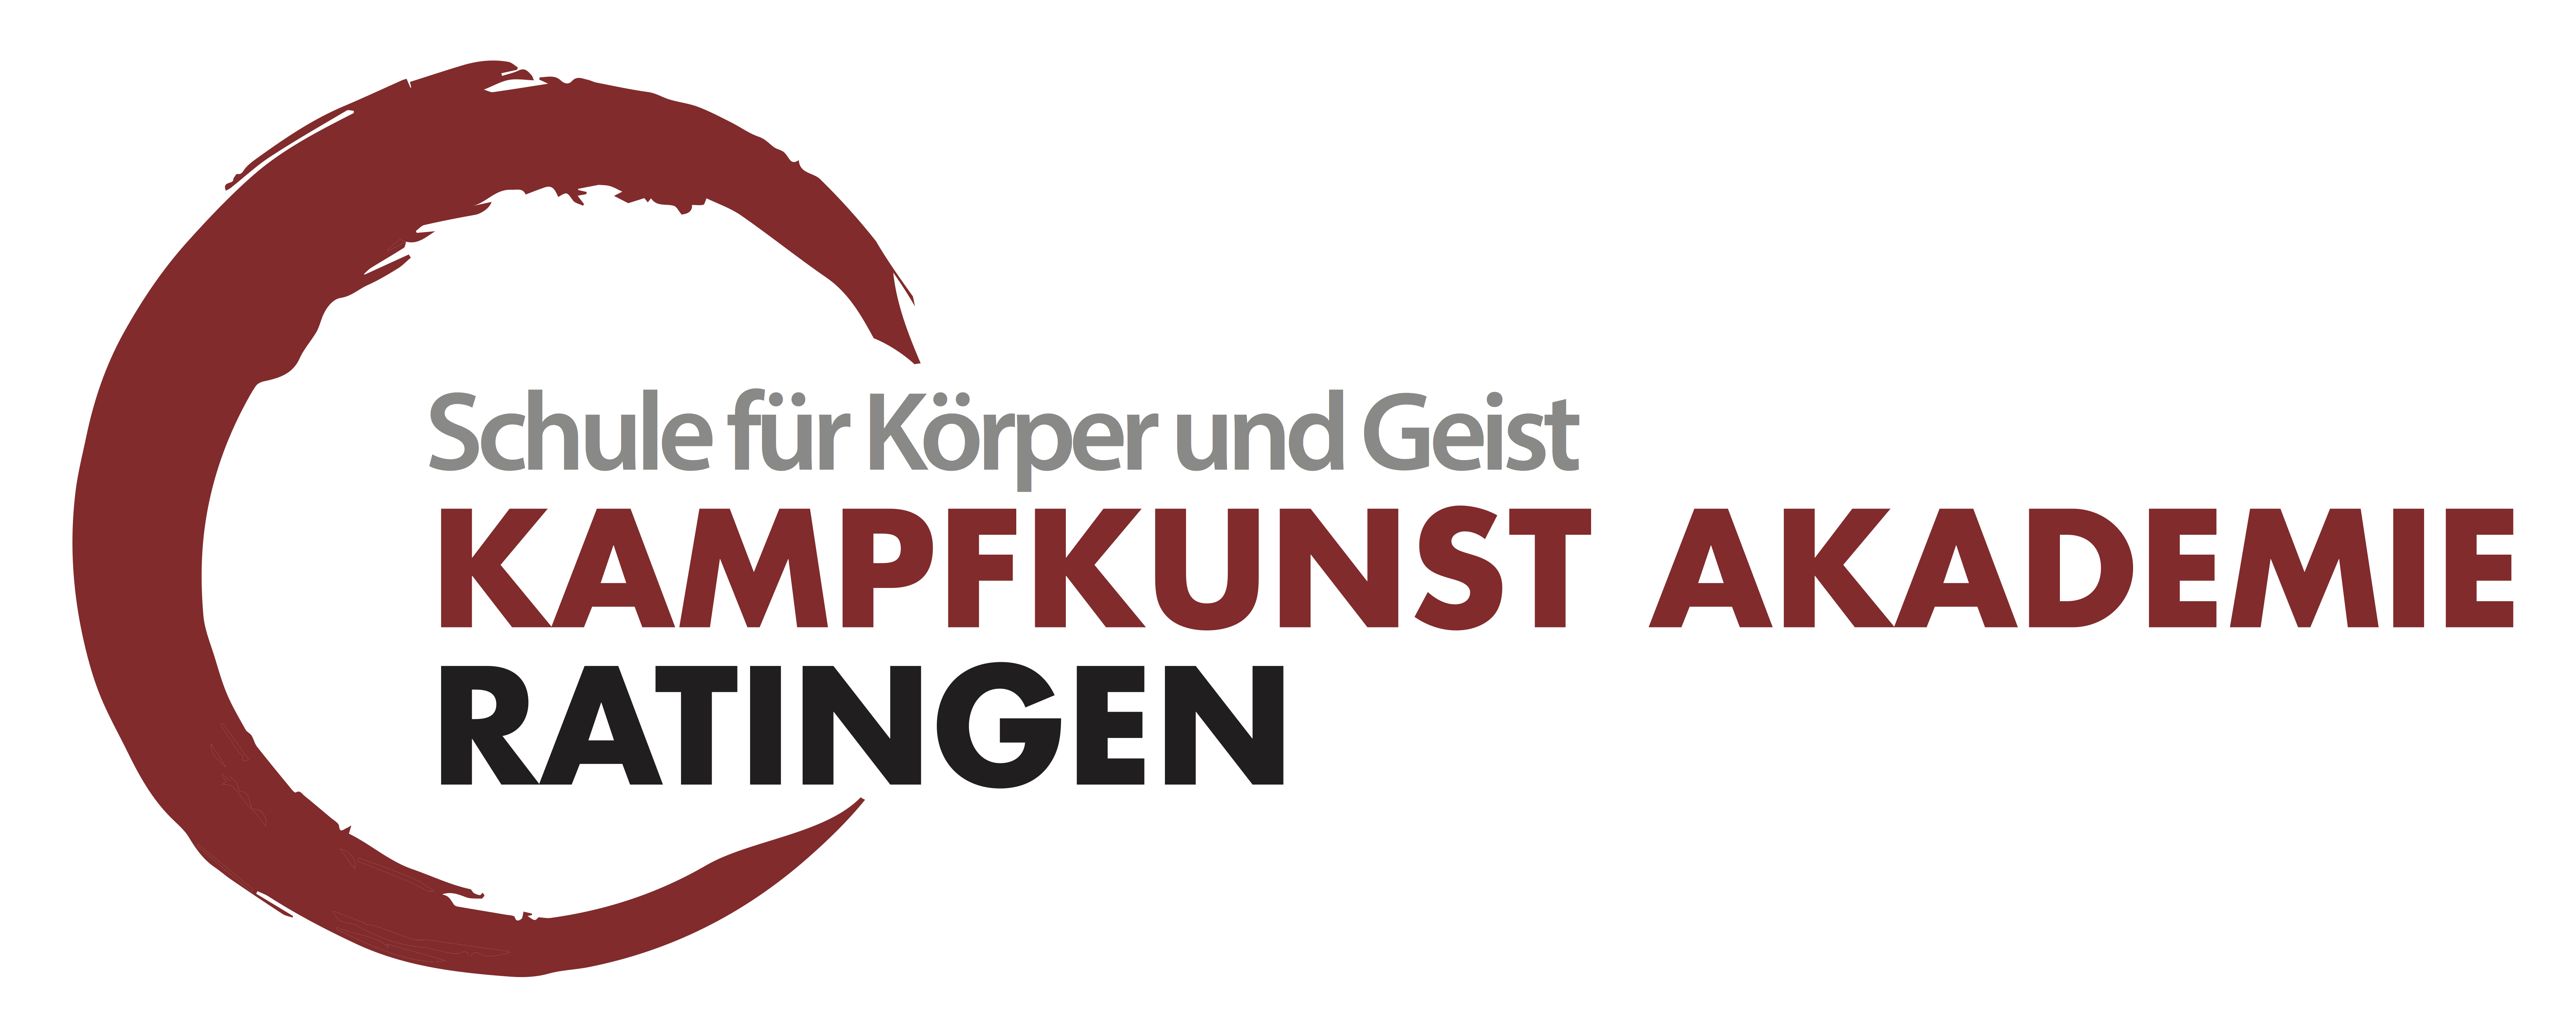 Kampfkunst Akademie Ratingen Logo